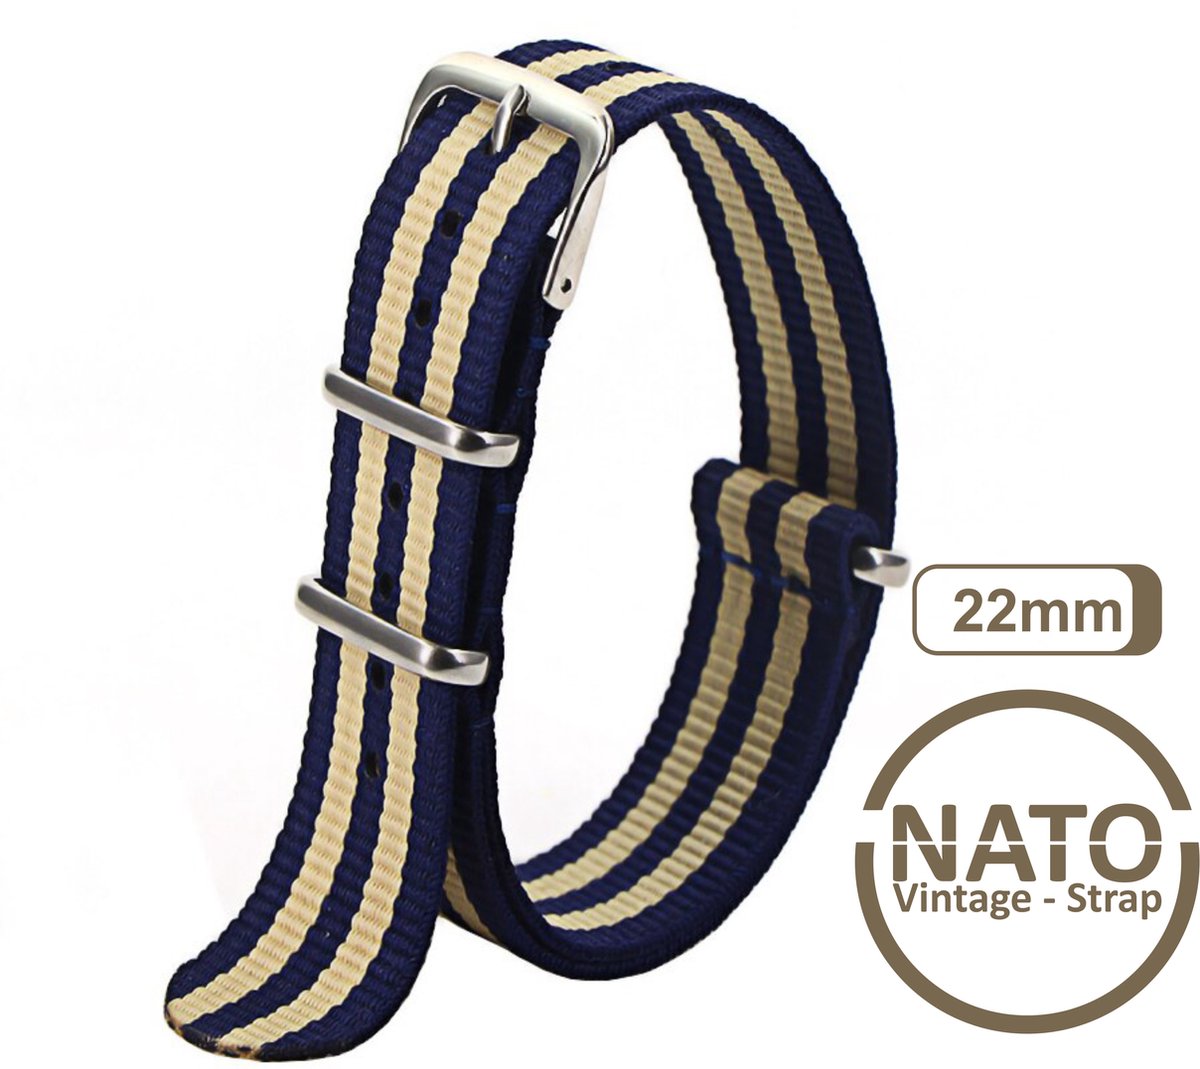 22mm Nato Strap Blauw Khaki - Goud streep - Vintage James Bond - Nato Strap collectie - Mannen - Horlogebanden - Gestreept 22 mm bandbreedte voor oa. Seiko Rolex Omega Casio en Citizen